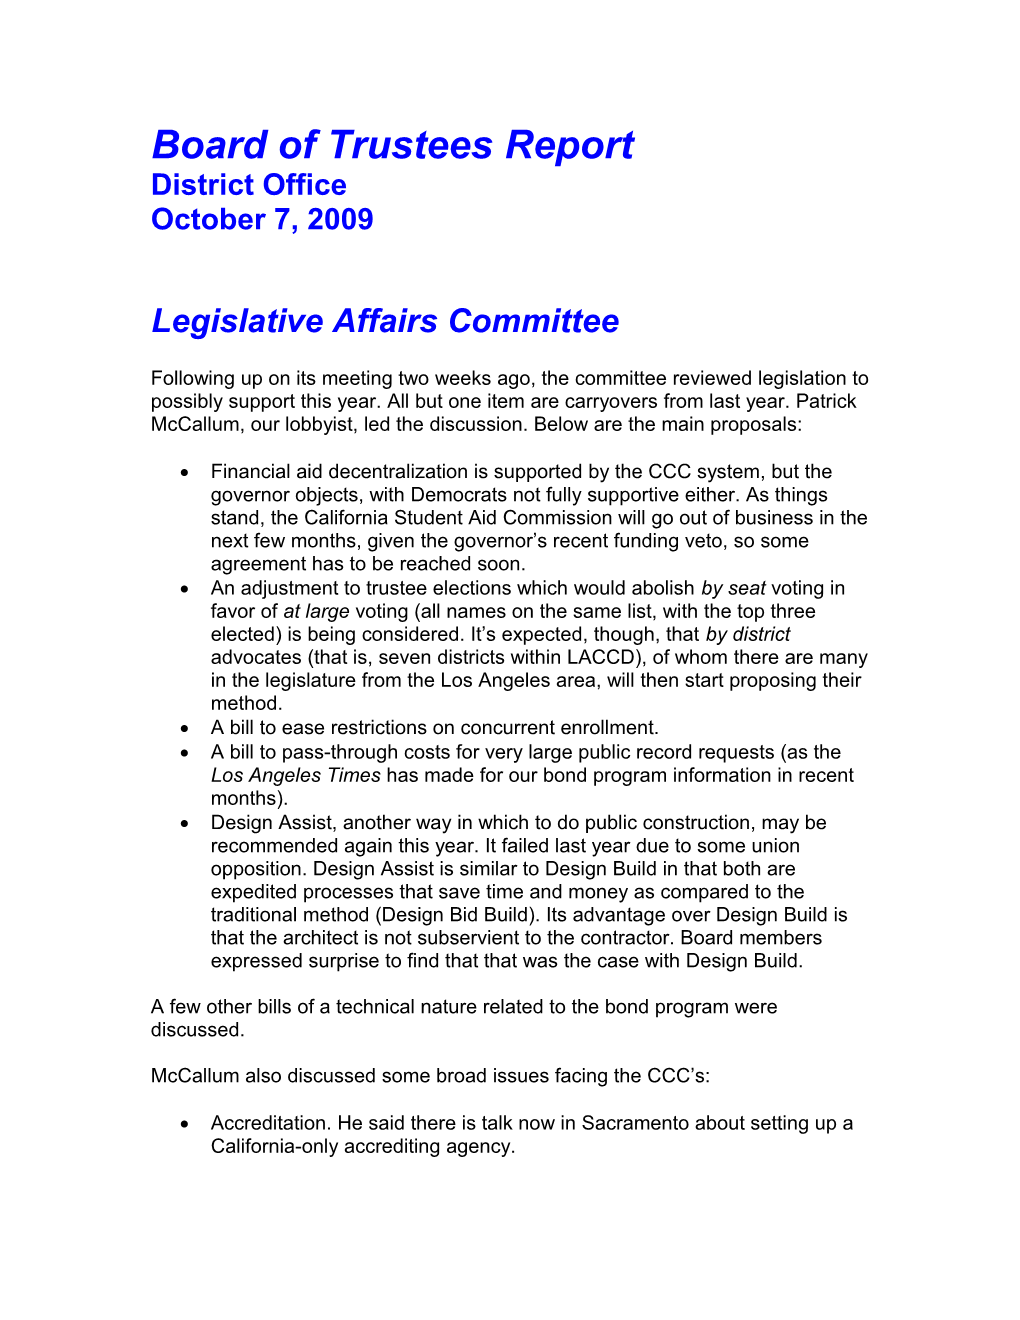 Board of Trustees Report s2